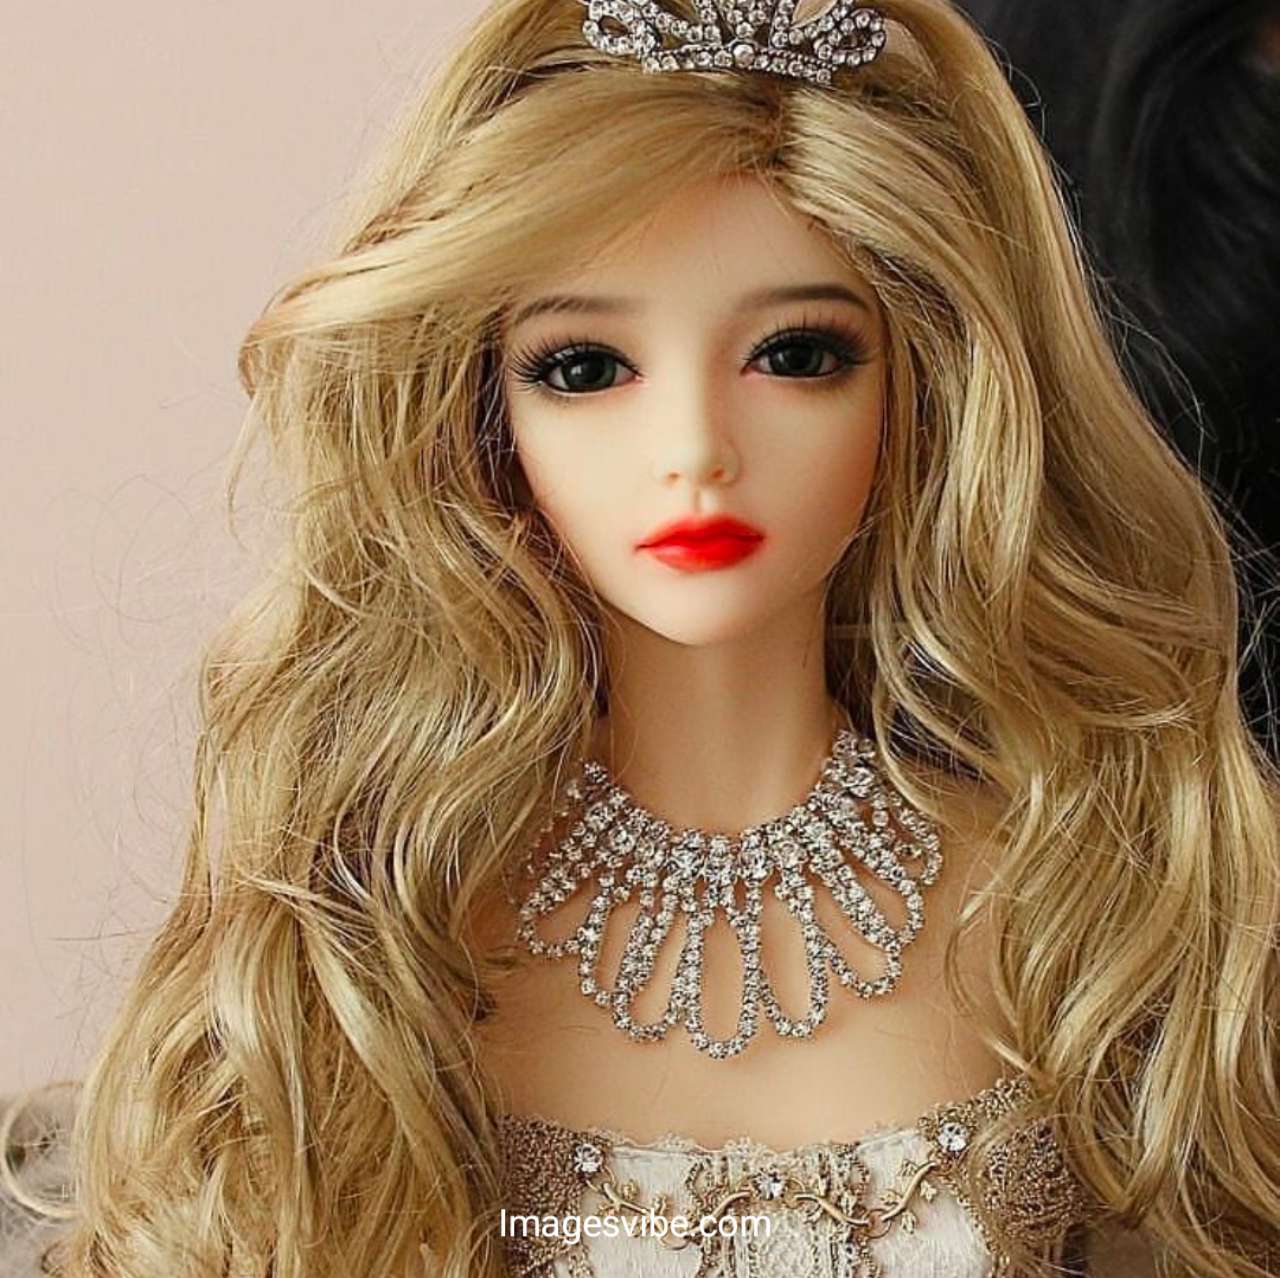 Top 999+ whatsapp dp princess cute doll images – Amazing Collection whatsapp dp princess cute doll images Full 4K